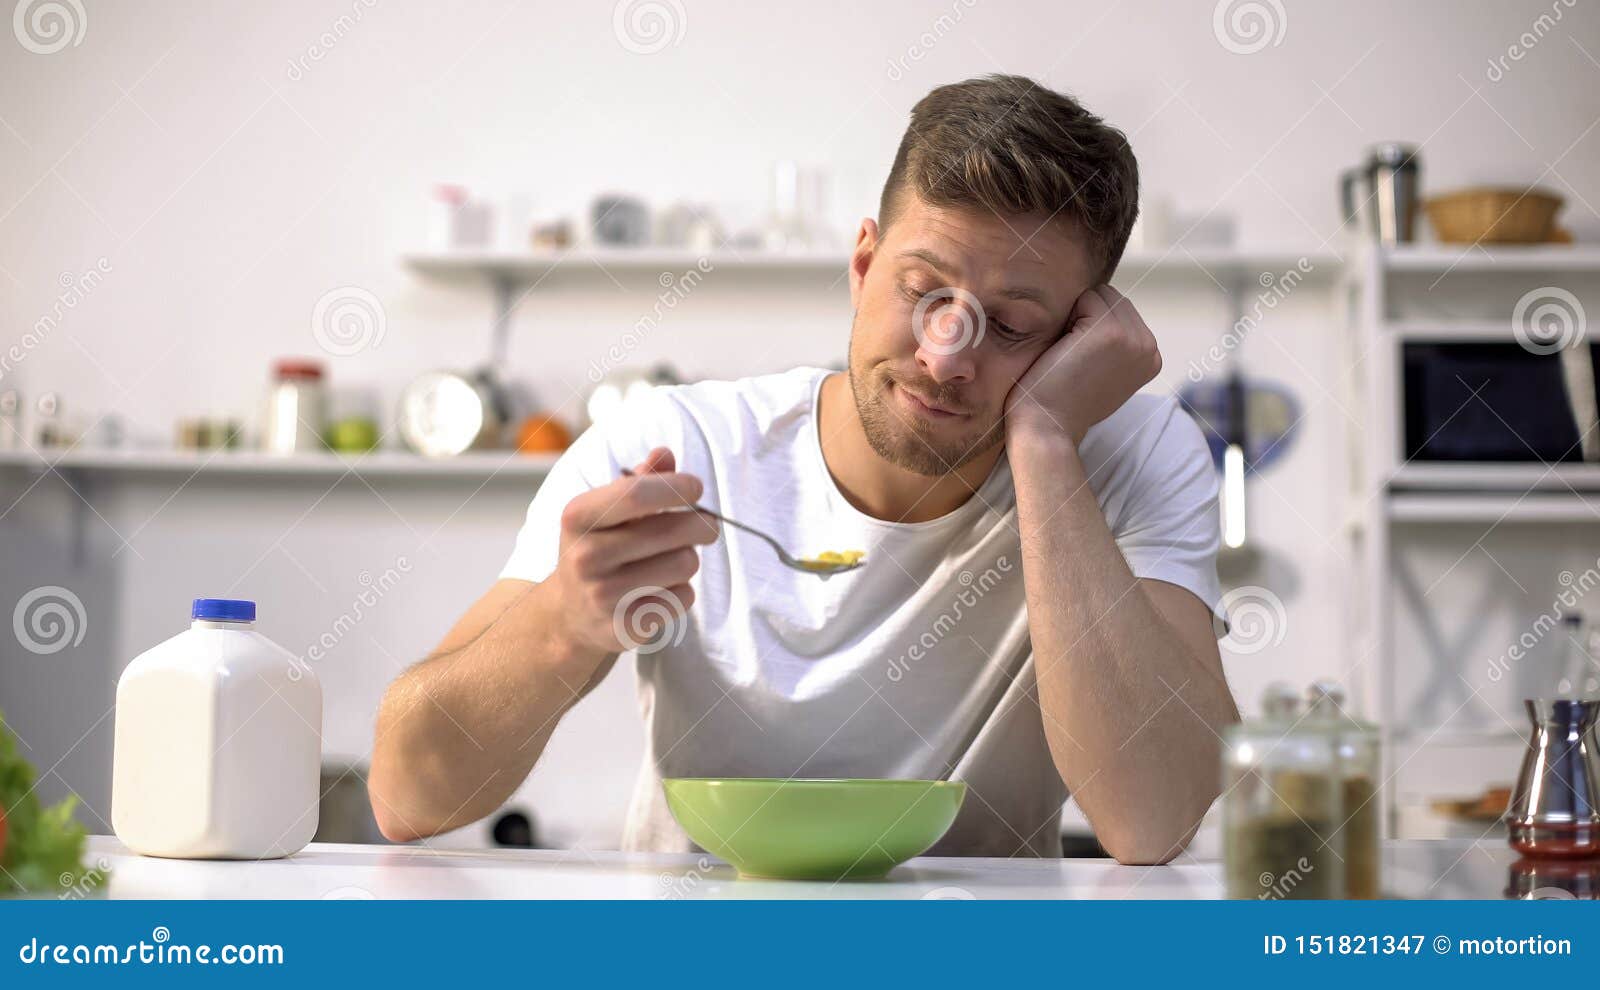 upset single man eating tasteless cereals for breakfast, lack of appetite